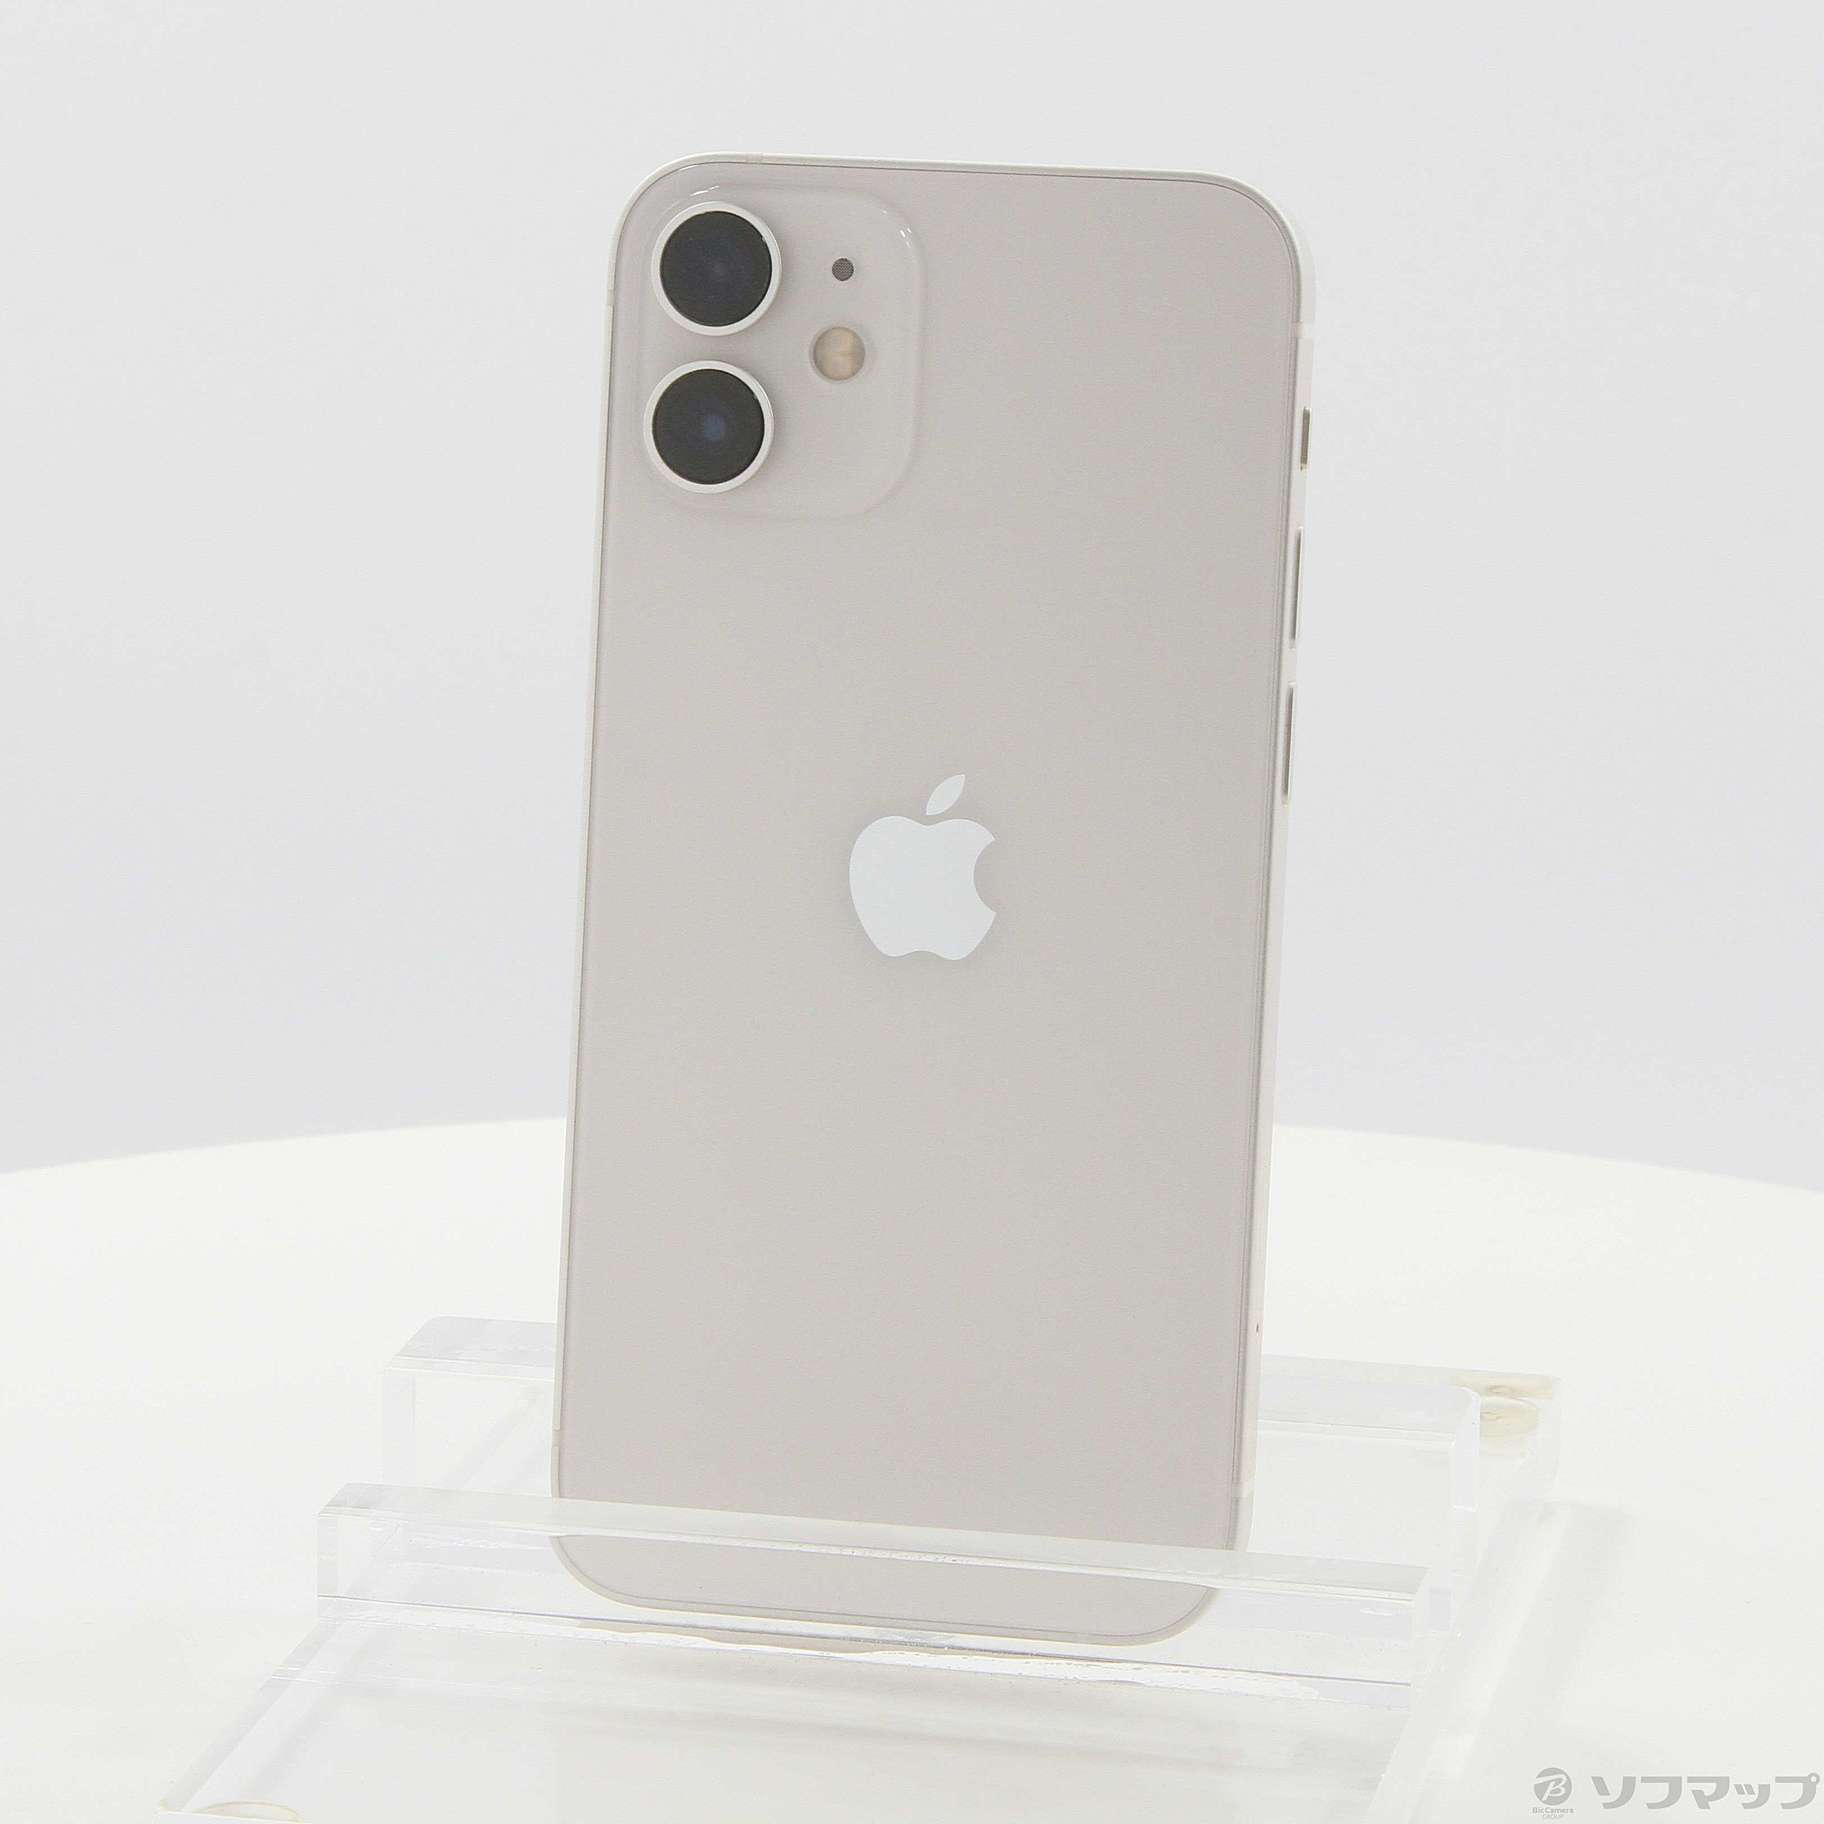 iPhone 12 mini 64GB SIMフリー [ホワイト] 中古(白ロム)価格比較 ...